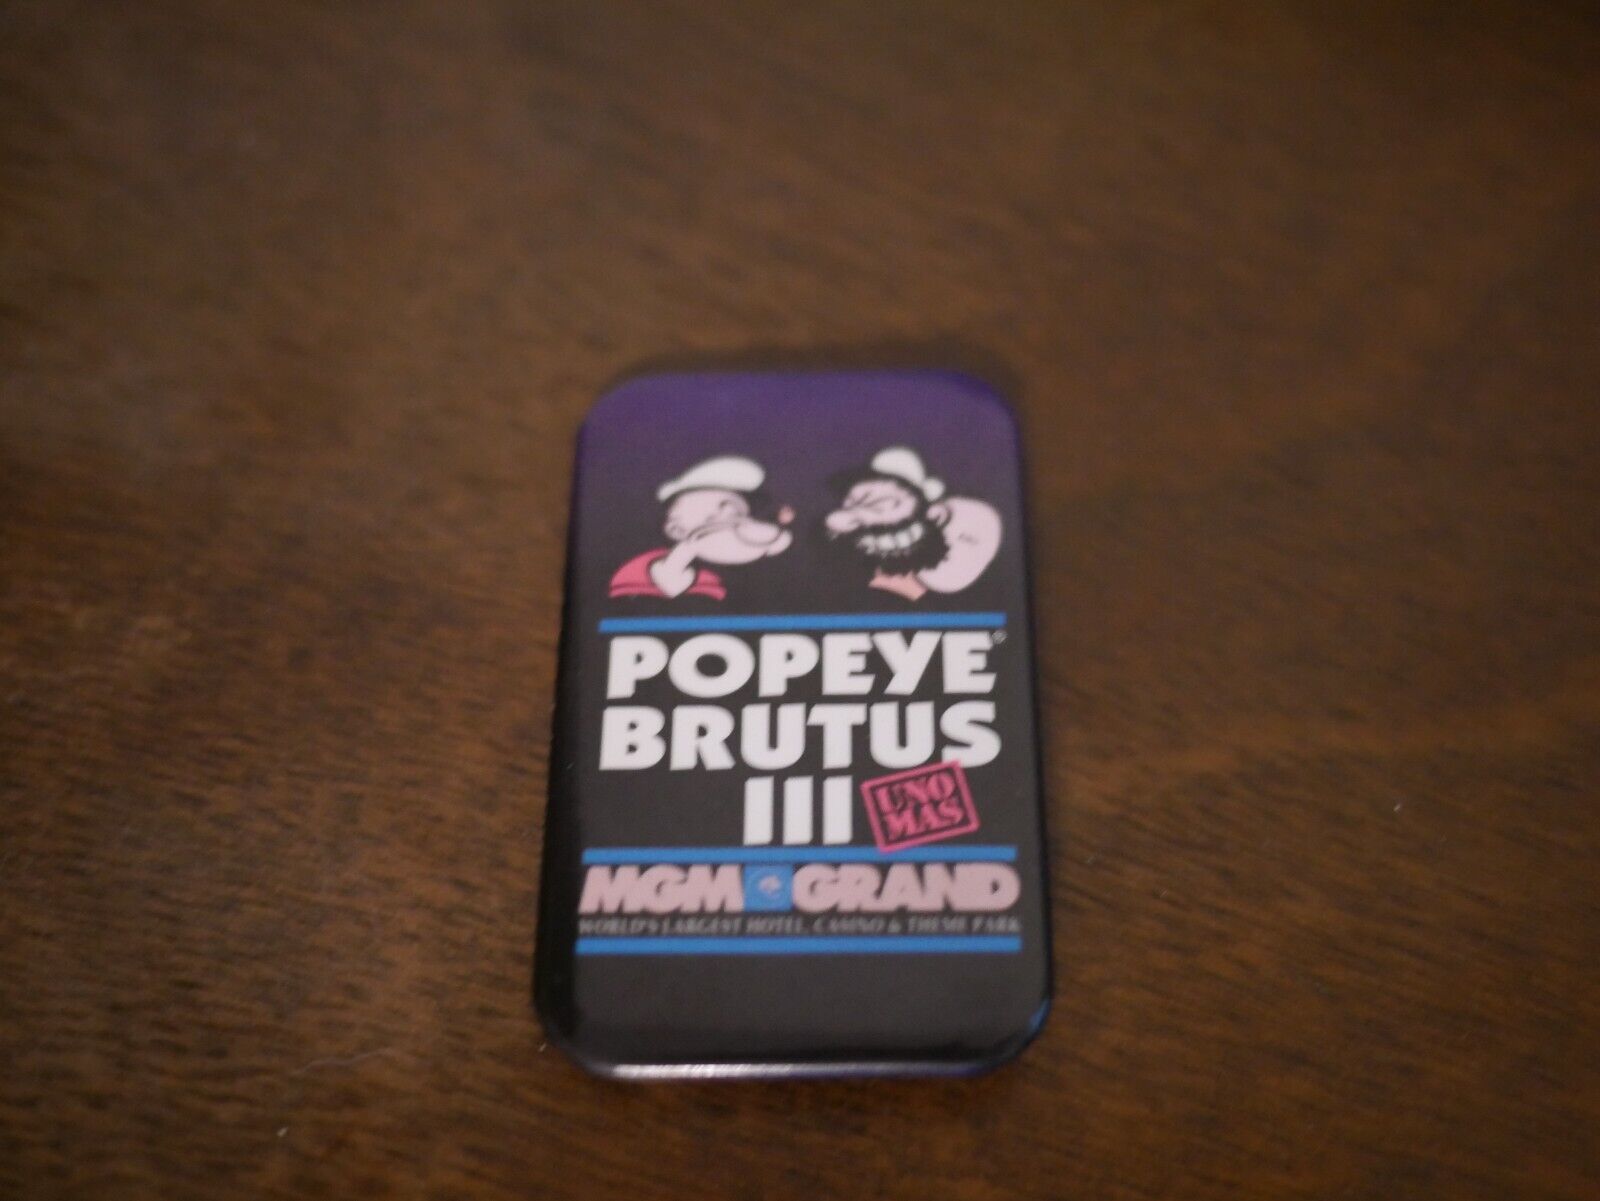 Popeye Brutus 3 Uno Mas MGM Grand button